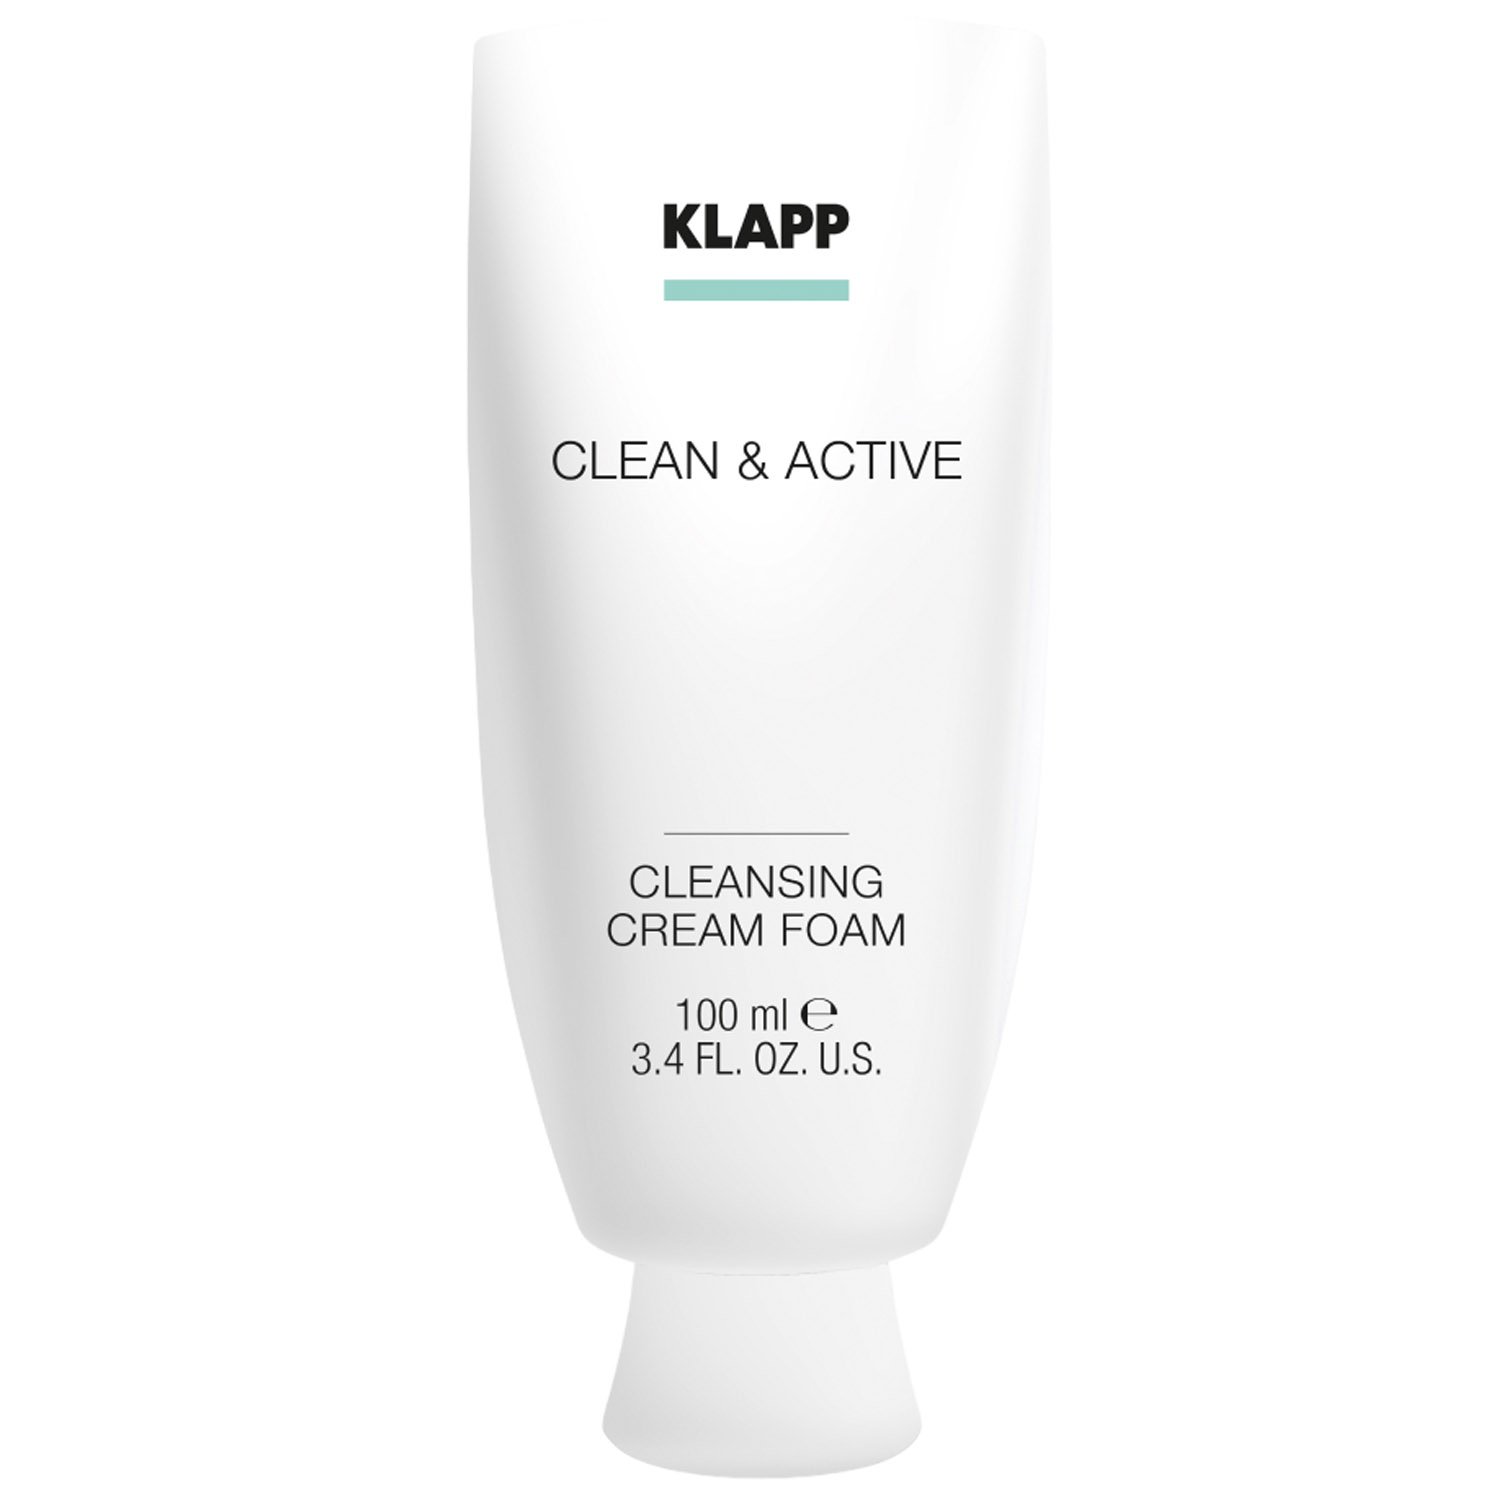 Крем пенка Klapp Clean & Active Cleansing Cream Foam, 100 мл - фото 1